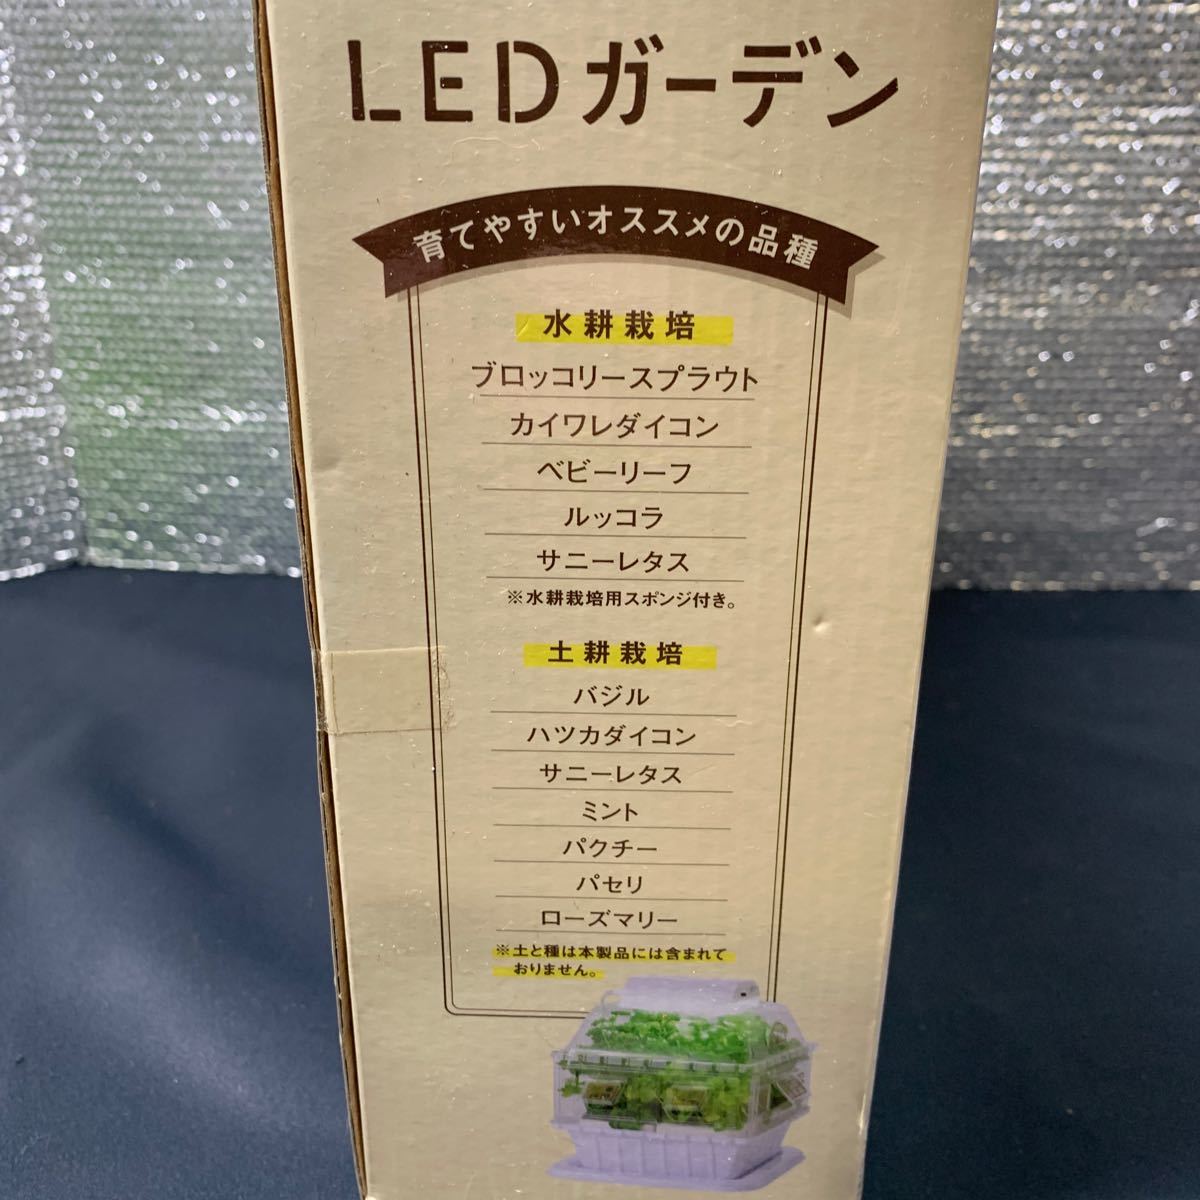 * Osaka / store receipt possible * unused LED garden hydroponic culture earth . cultivation cultivation kit interior Gakken herb salad vegetable kitchen garden *